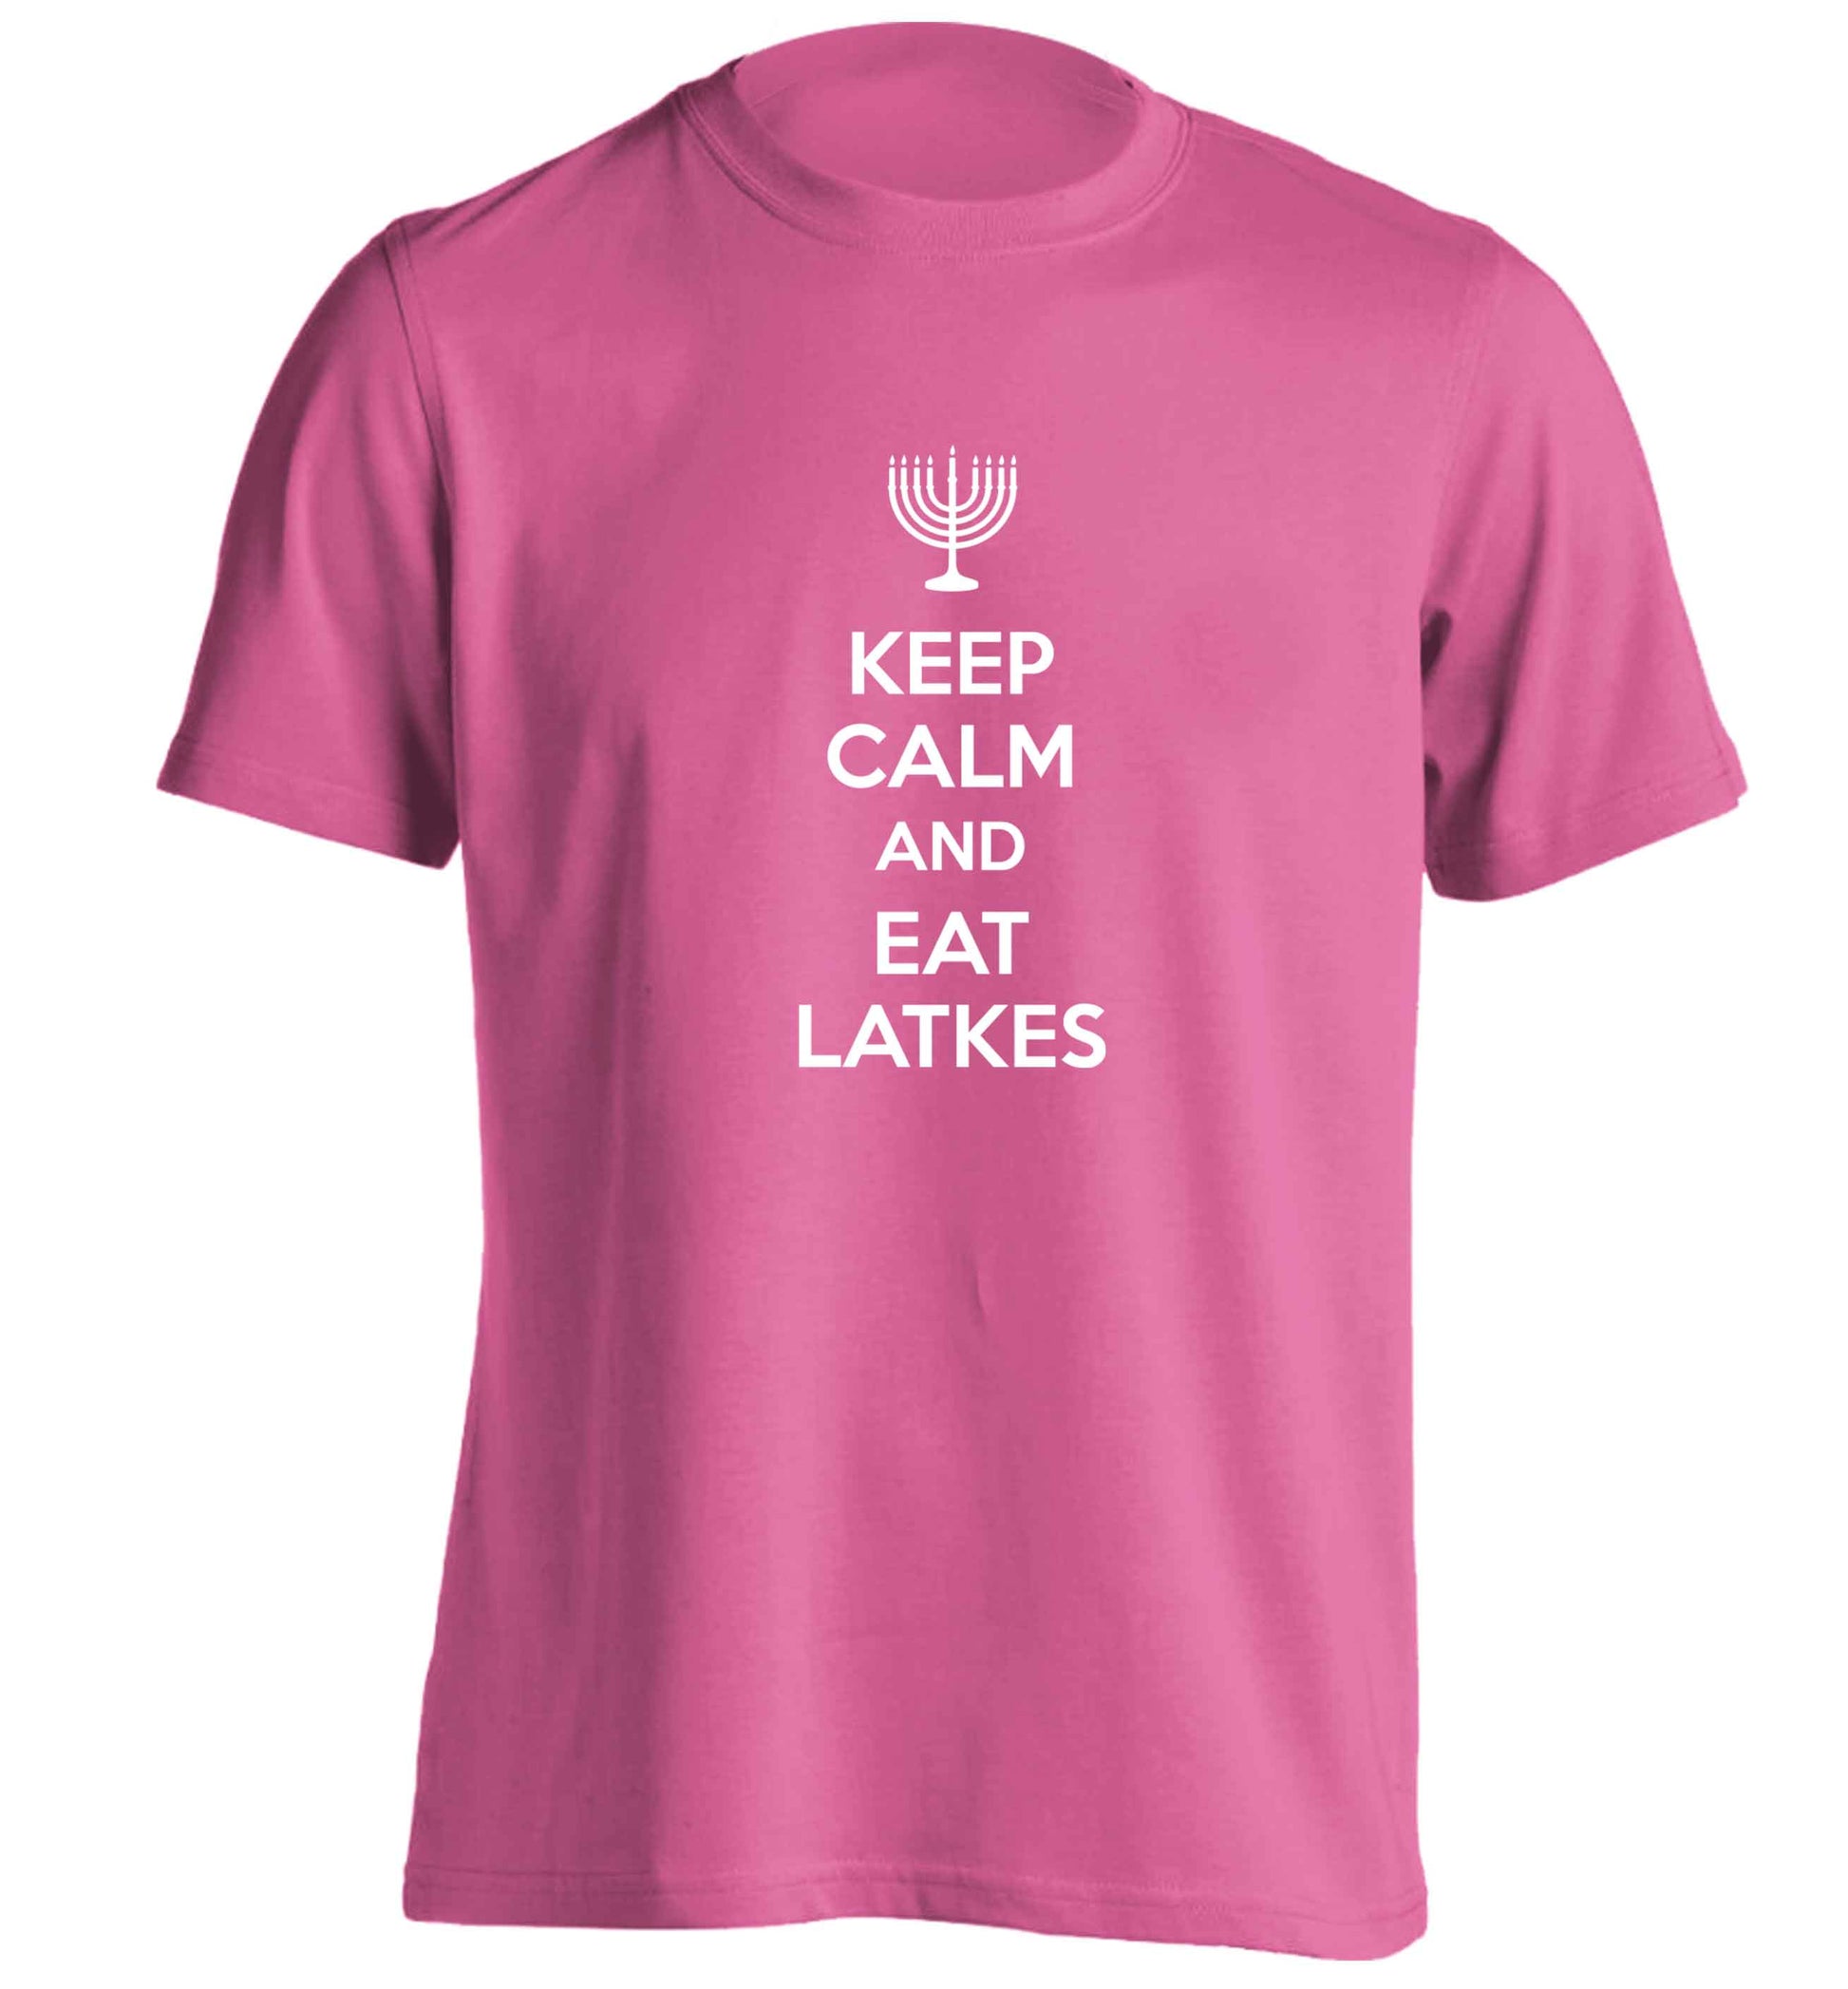 Keep calm and eat latkes adults unisex pink Tshirt 2XL